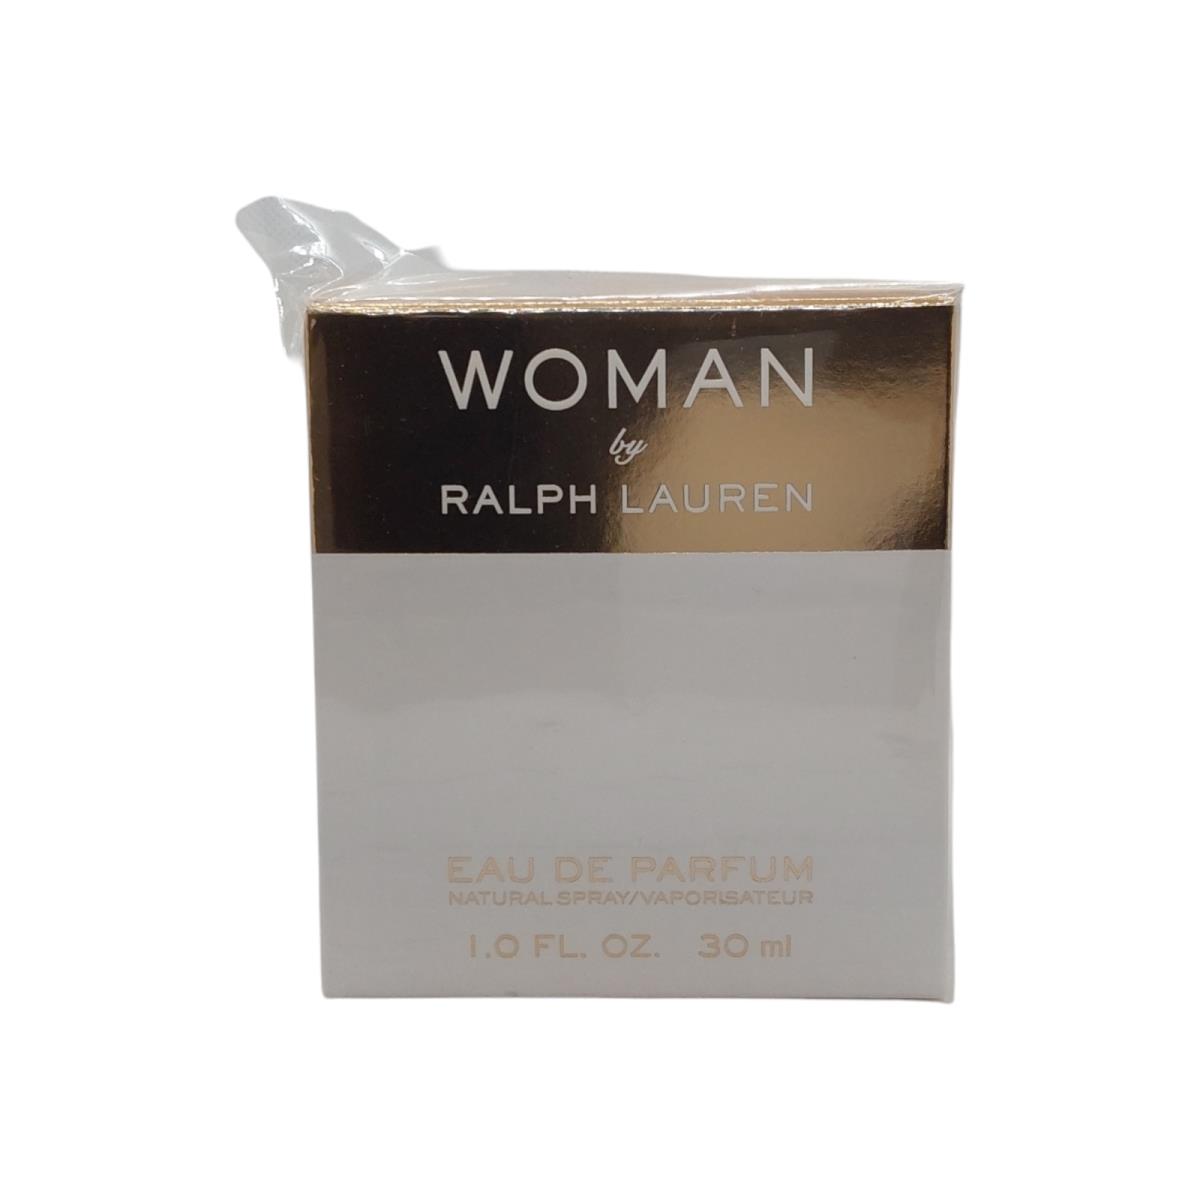 Woman by Ralph Lauren Eau De Parfum 1 oz 30 ml Women Perfume Spray Damage Box